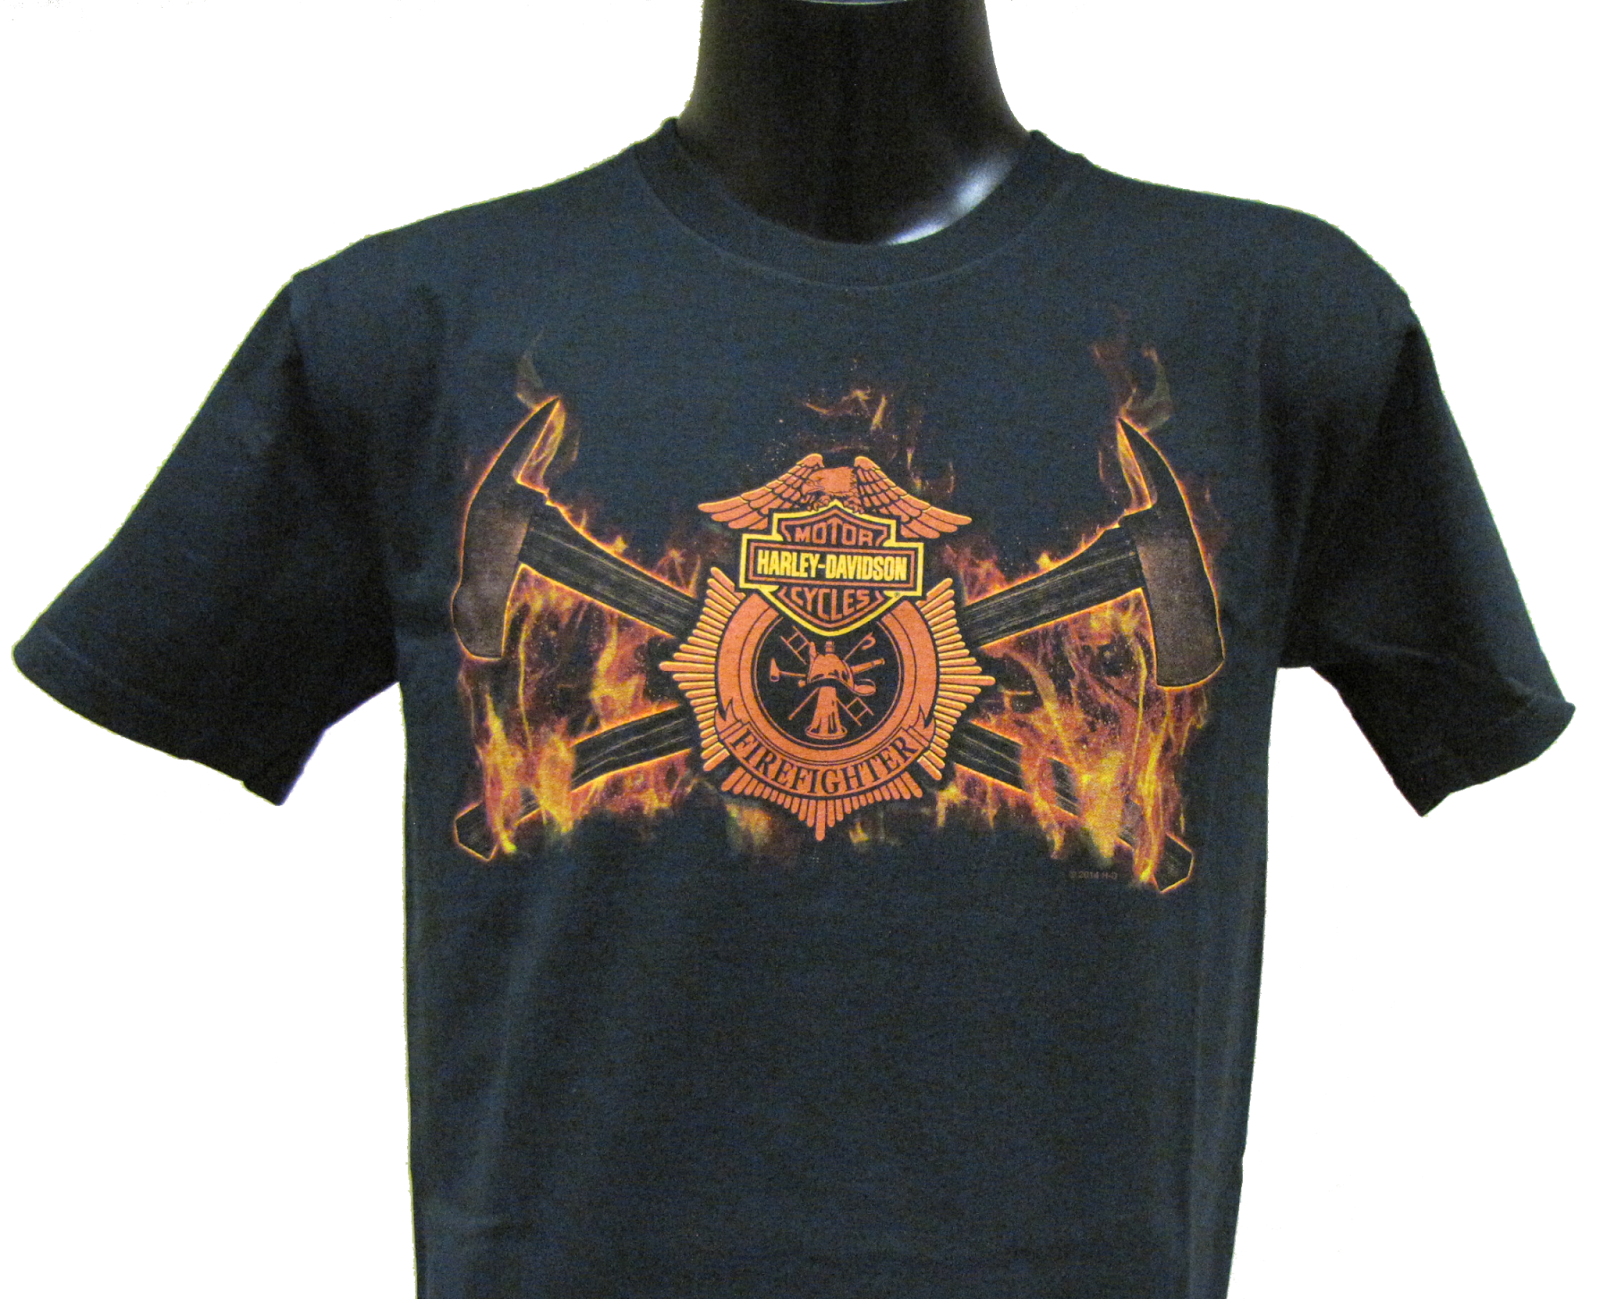 http://www.adventureharley.com/harley-davidson-t-shirt-fire-axes-black